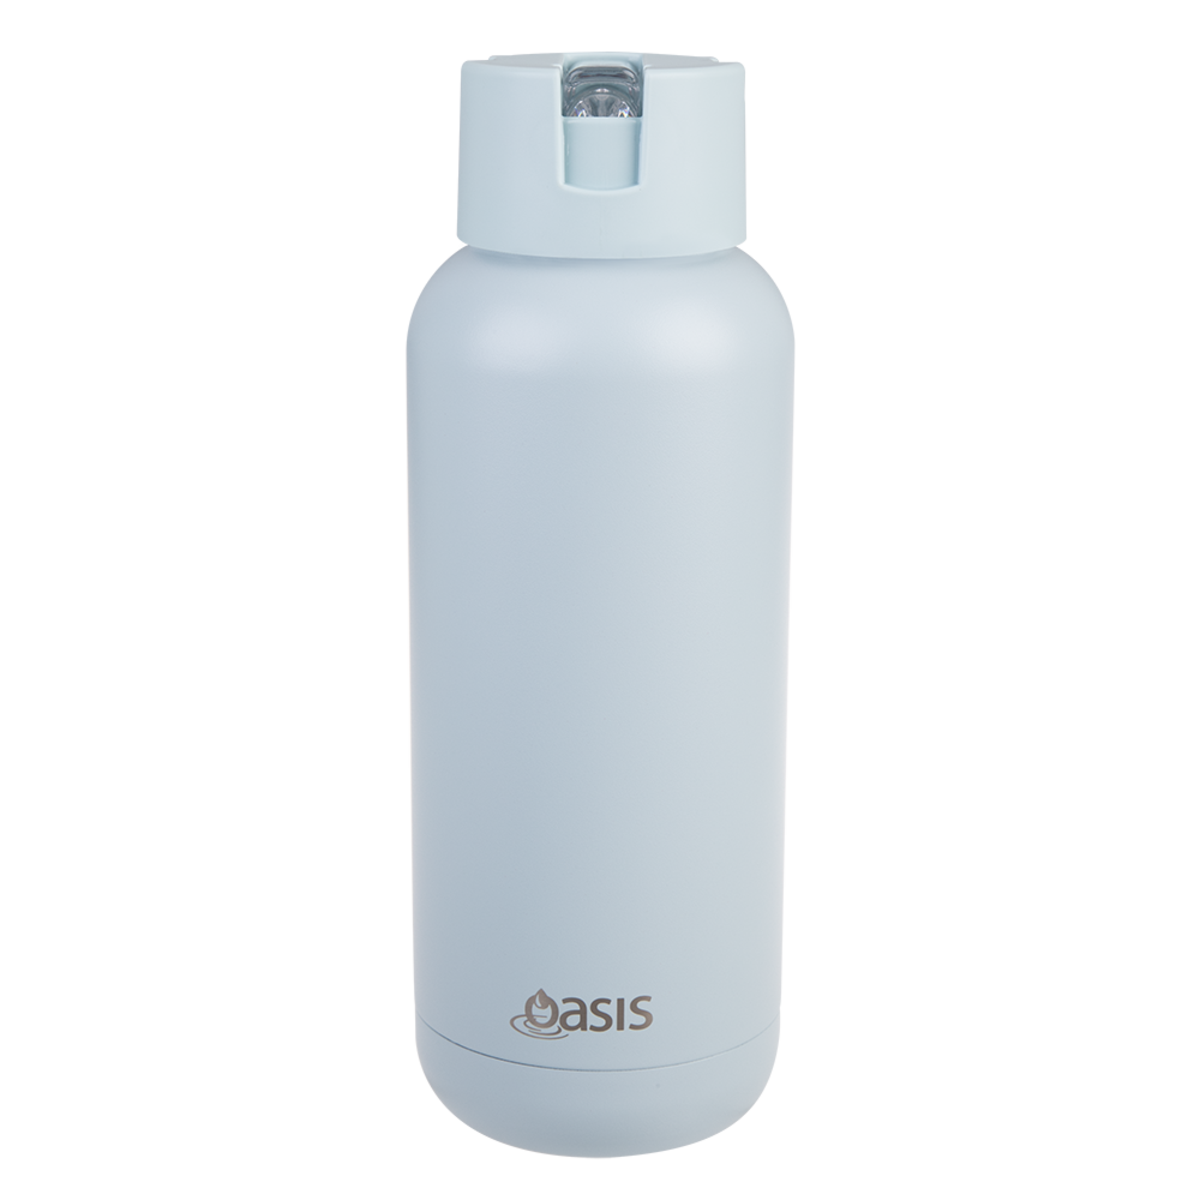 Oasis "moda" Ceramic Lined S/s Triple Wall Insulated Drink Bottle 1l - Sea Mist